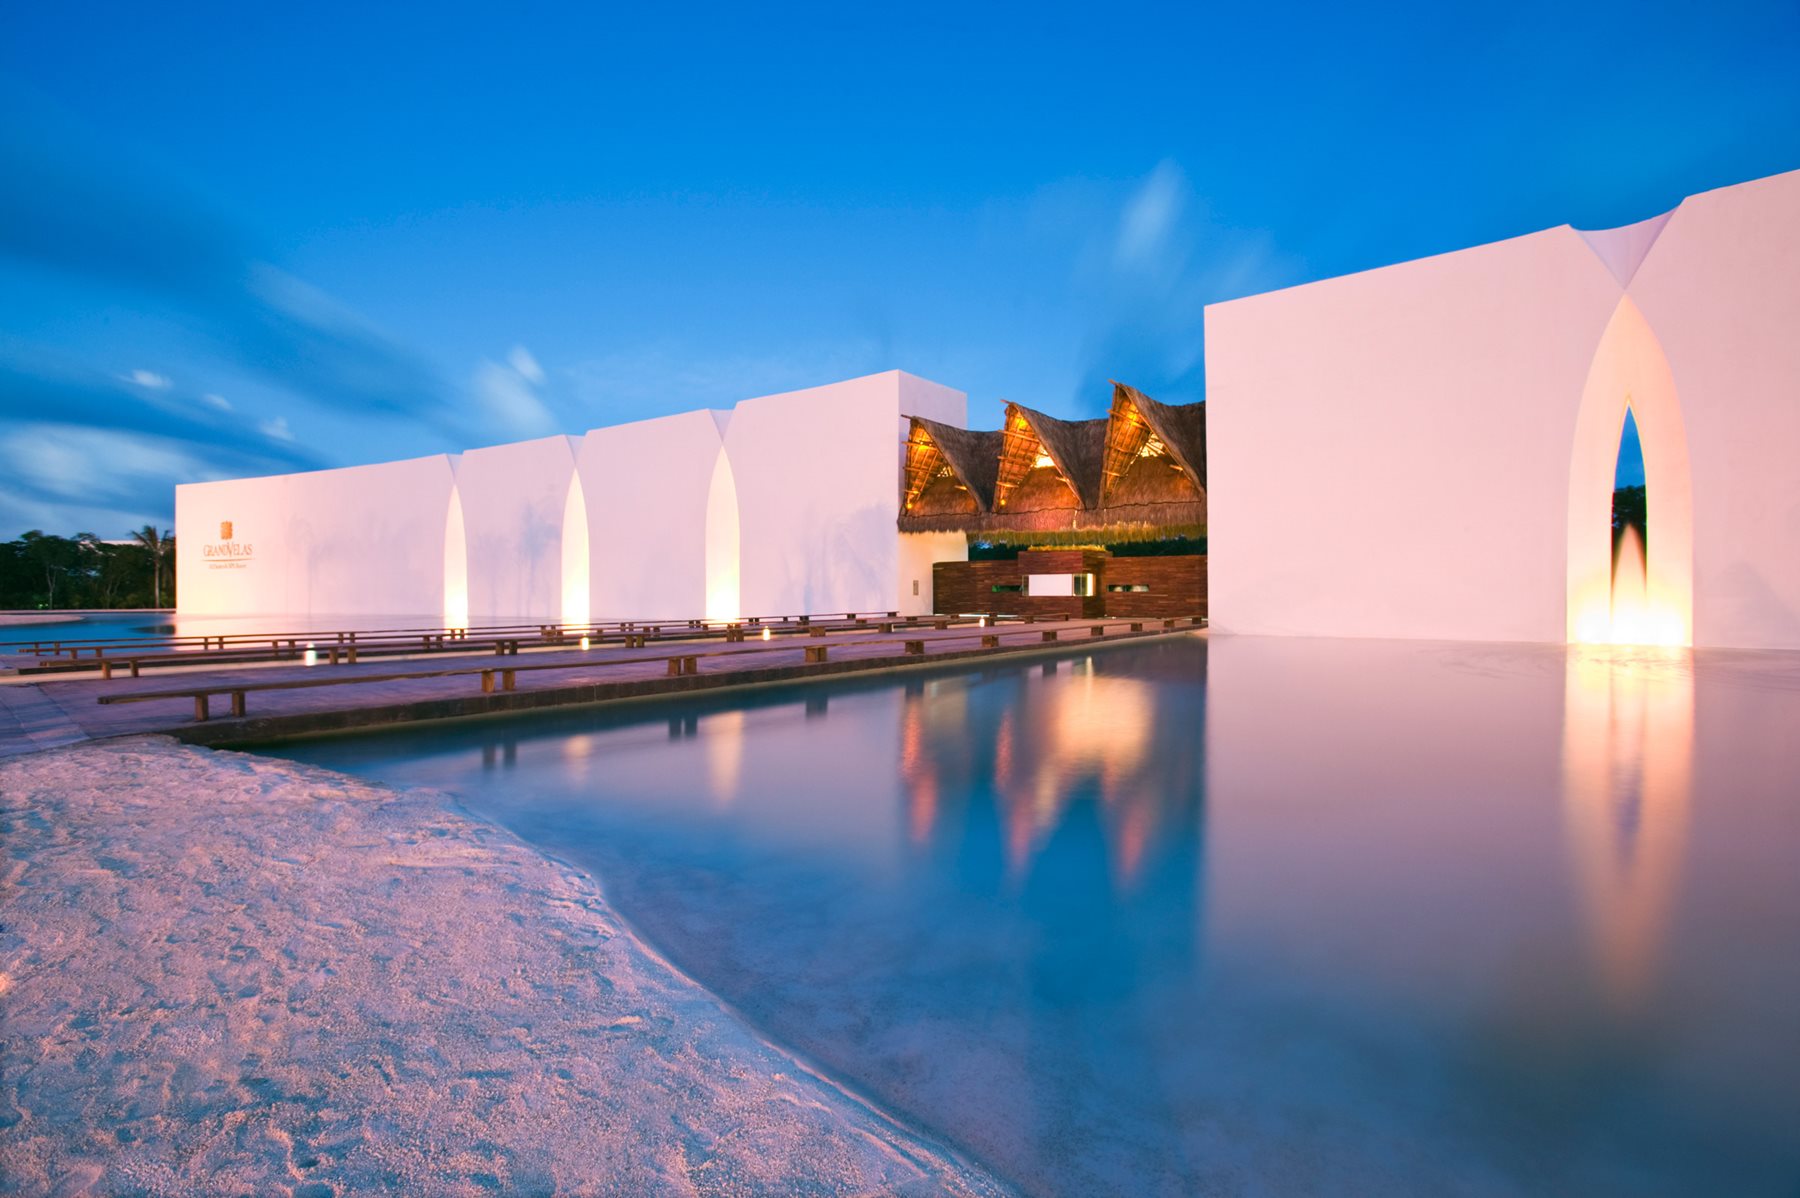 luxury hotels in cancun - Grand Velas Riviera Maya - entrance